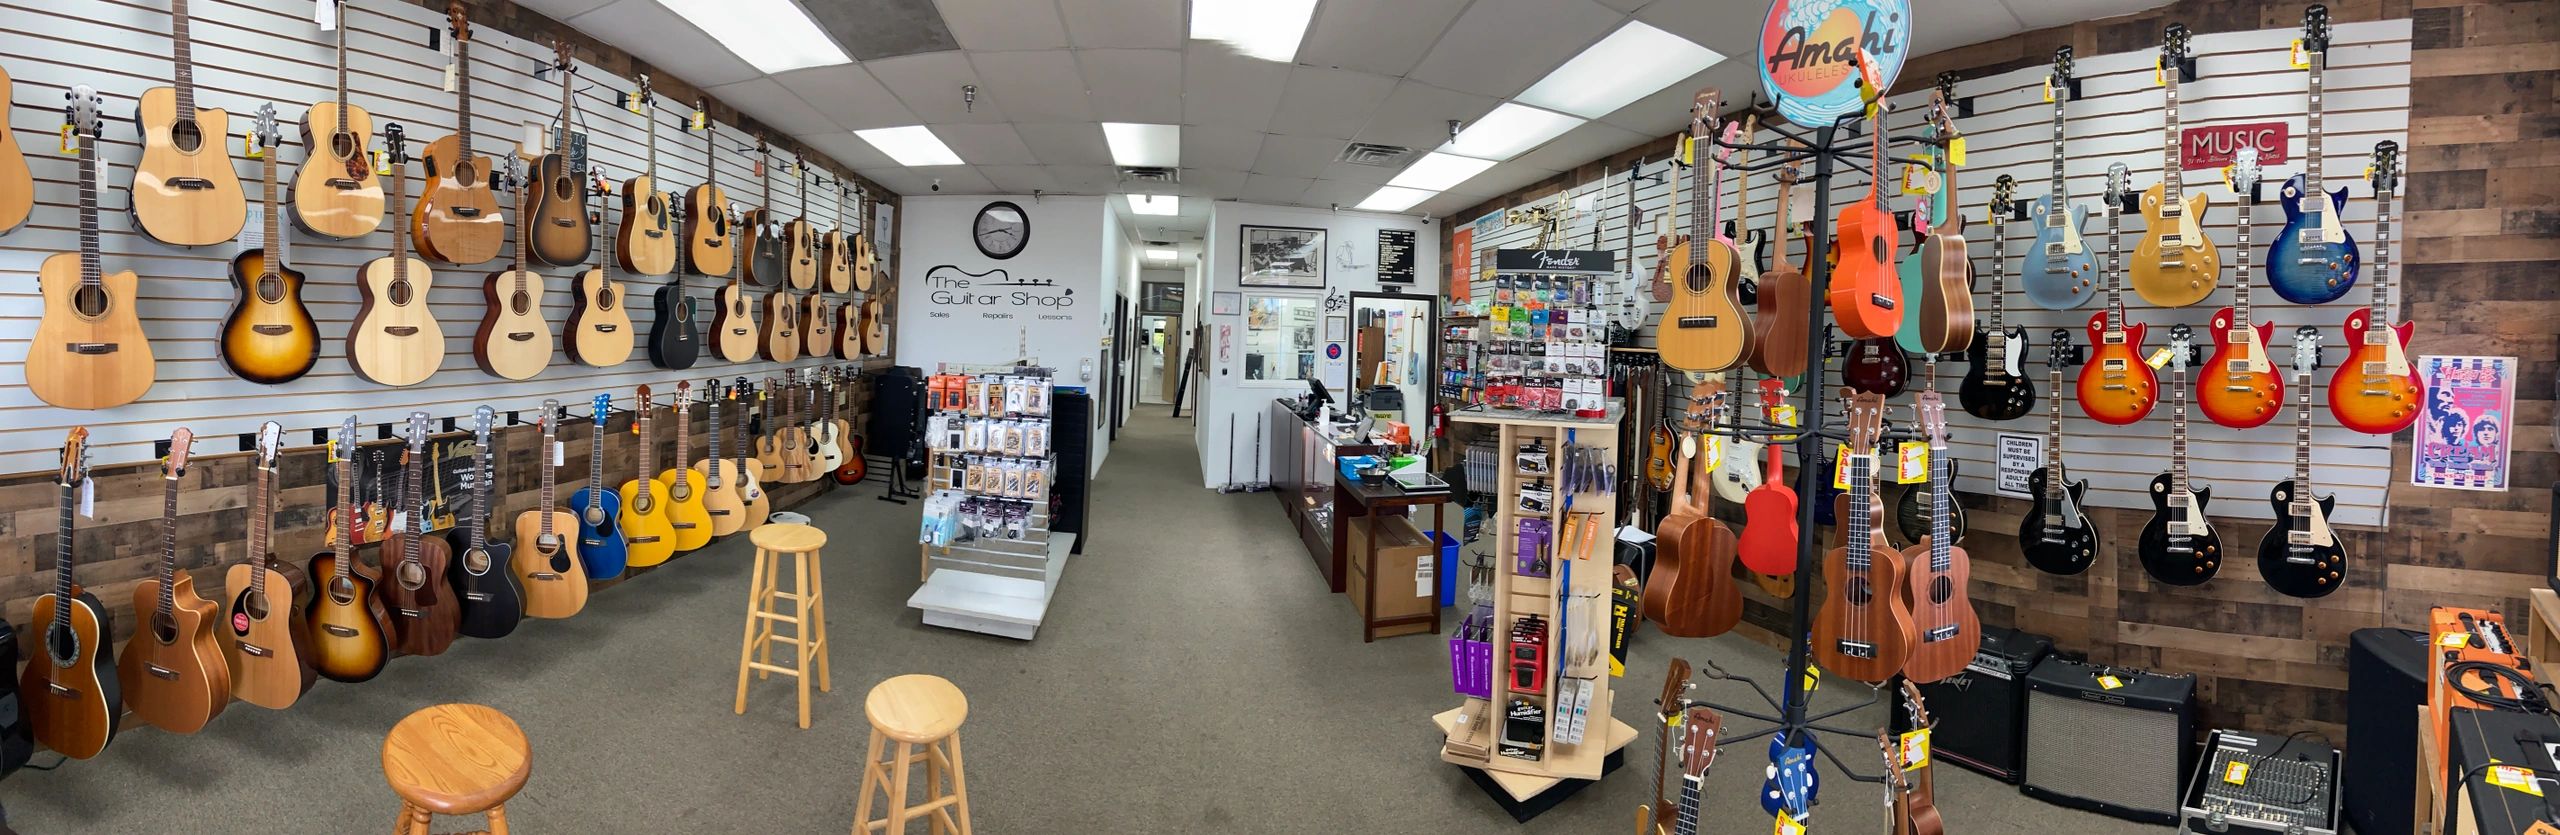 The Guitar Shop - Guitar Shop, Music Store